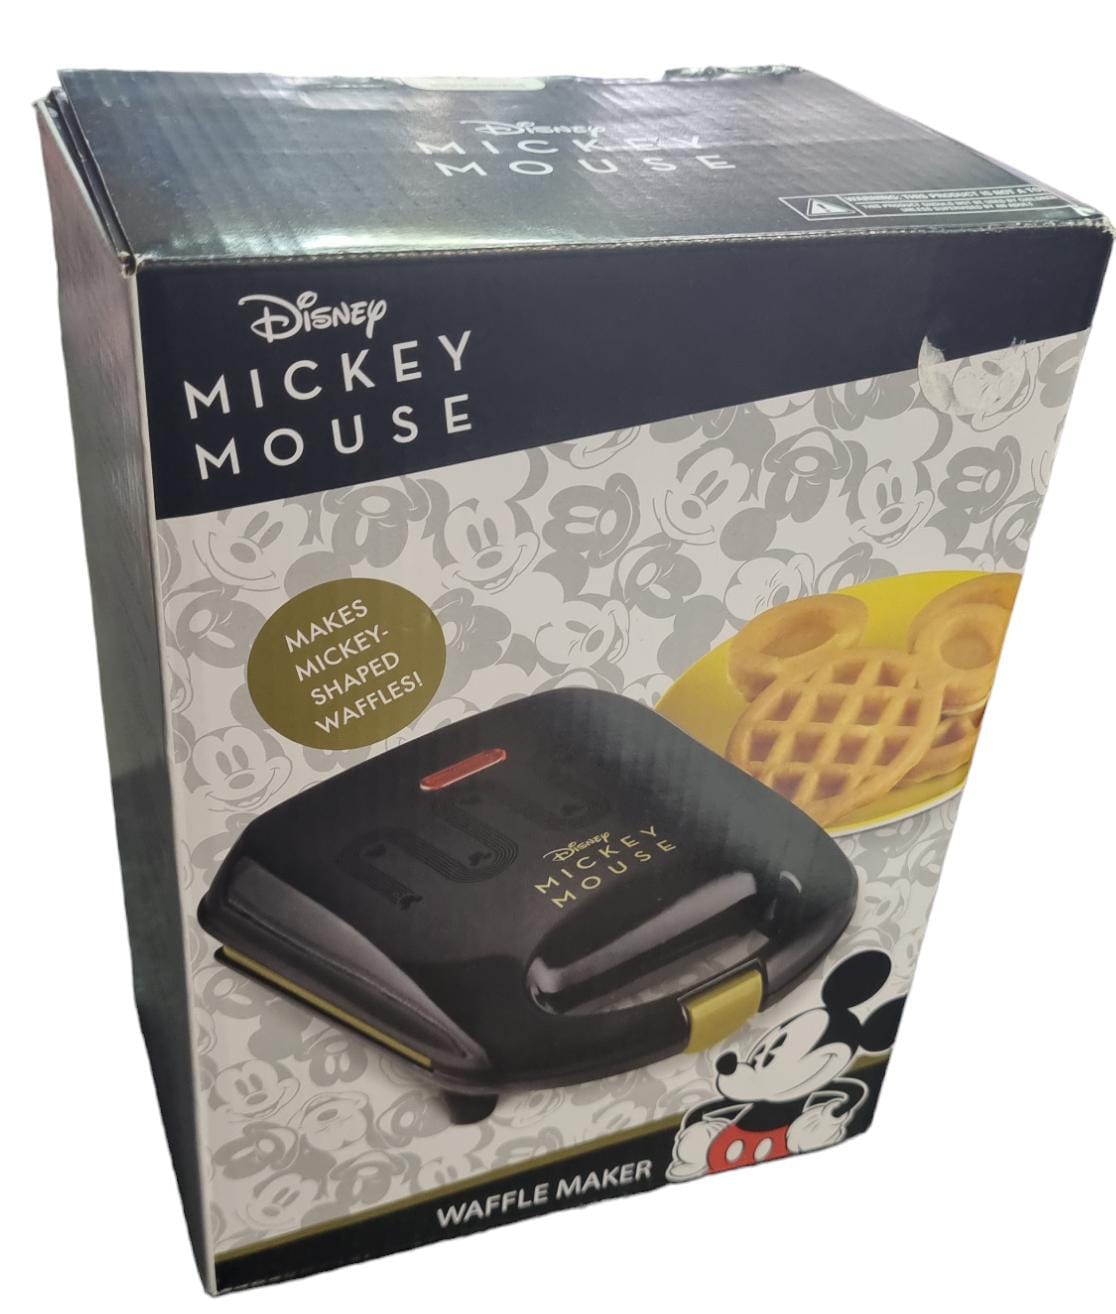 Disney Mickey Mouse Waffle Maker - BOXED & SEALED